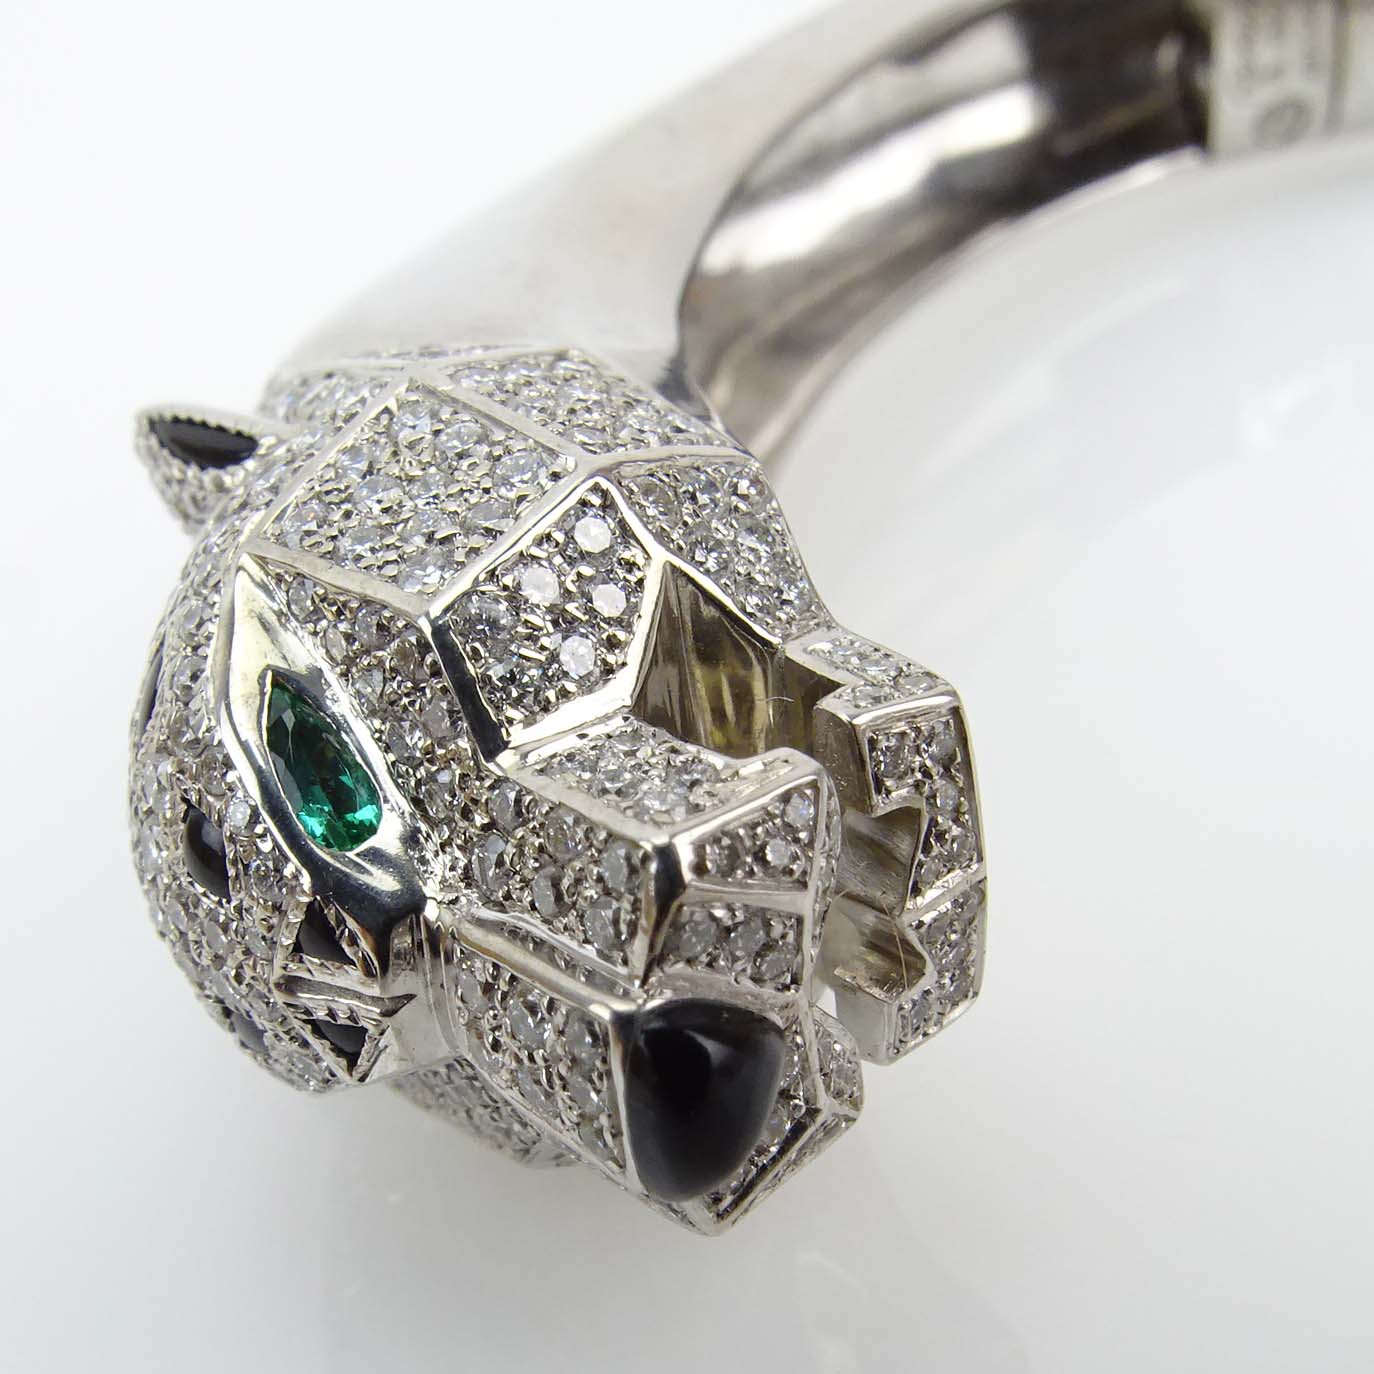 Cartier Approx. 4.0 Carat Pave Set Diamond, Black Onyx and 18 Karat White Gold Panther Bracelet with Emerald Eyes. 